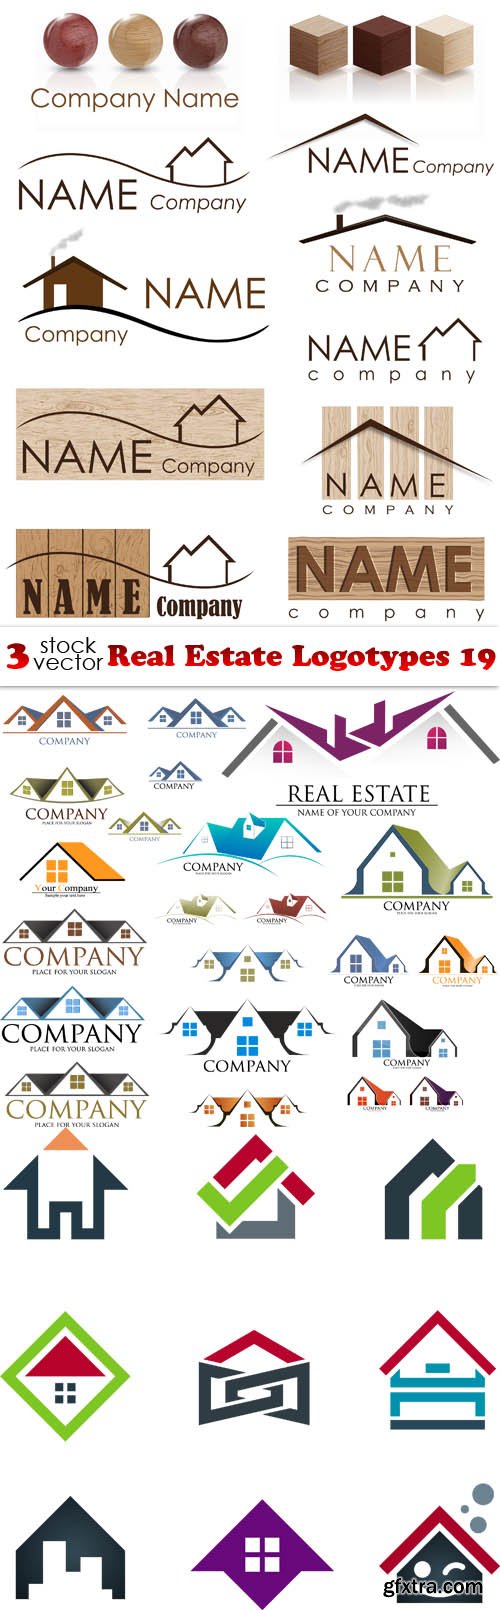 Vectors - Real Estate Logotypes 19